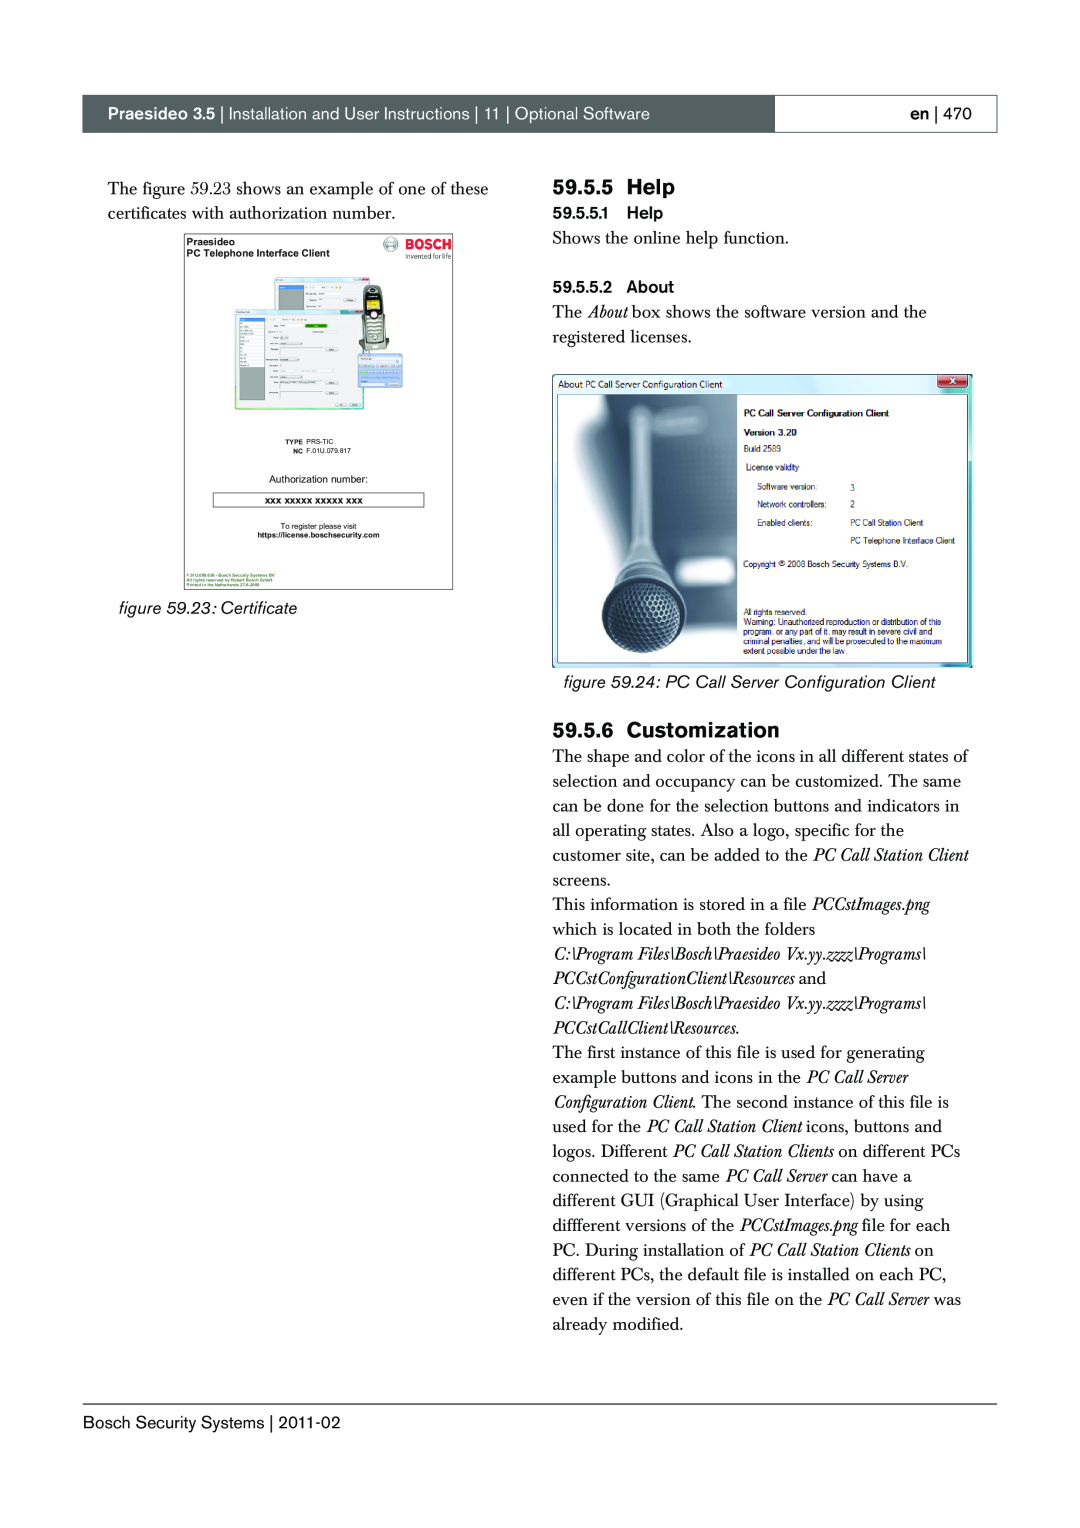 Bosch Appliances 3.5 manual Help, Customization, 23: Certificate, 24: PC Call Server Configuration Client 